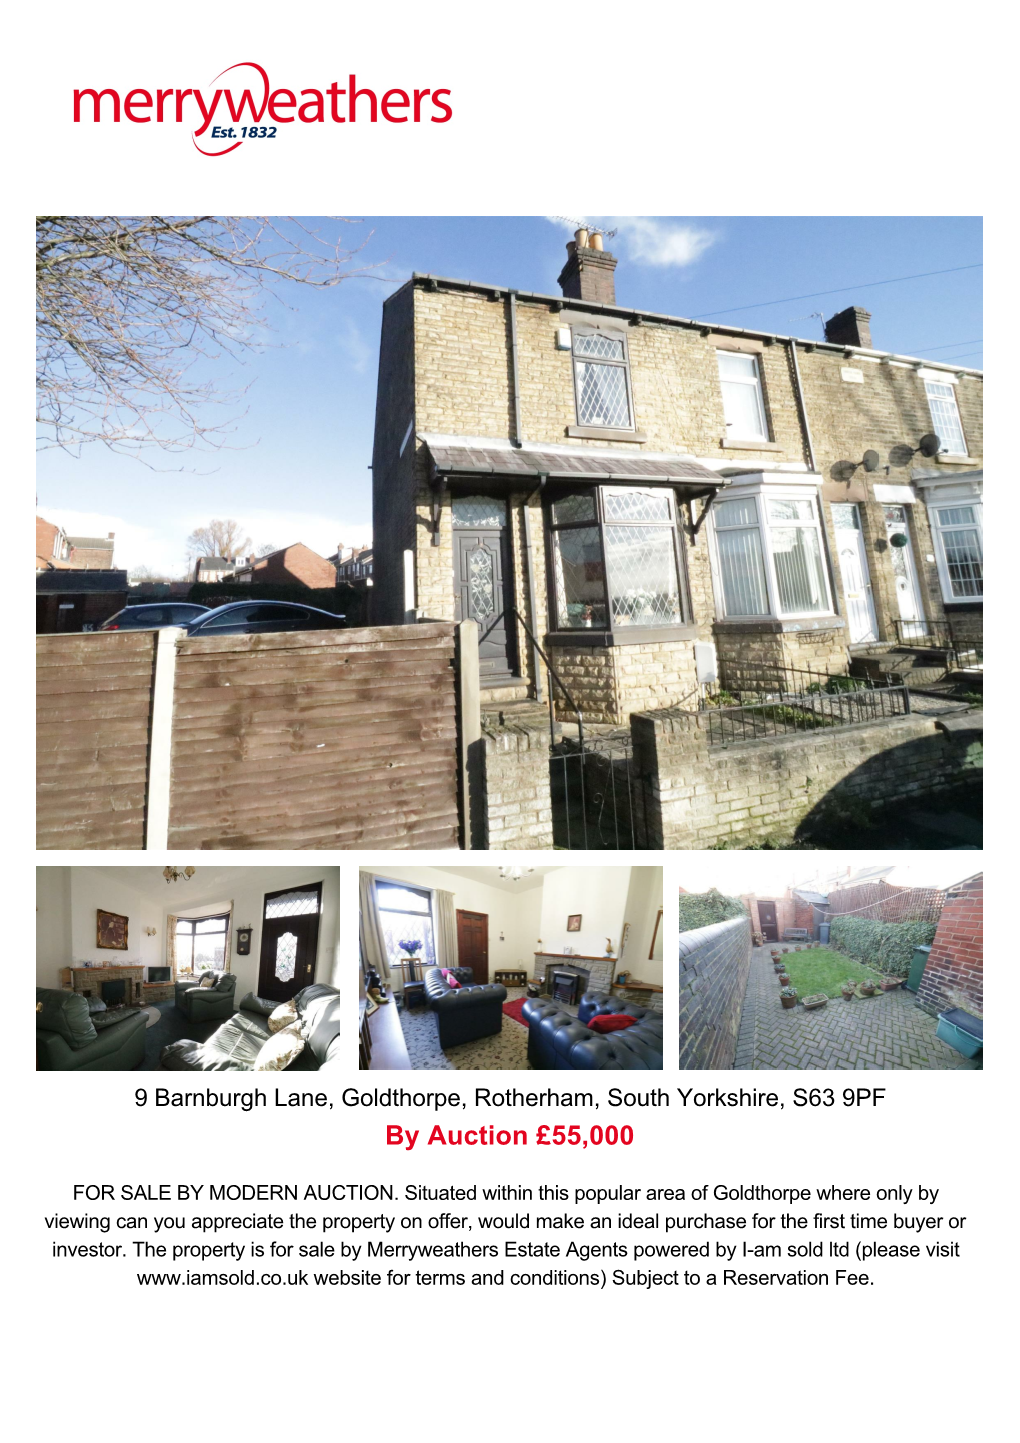 Barnburgh Lane, Goldthorpe, Rotherham, South Yorkshire, S63 9PF by Auction £55,000